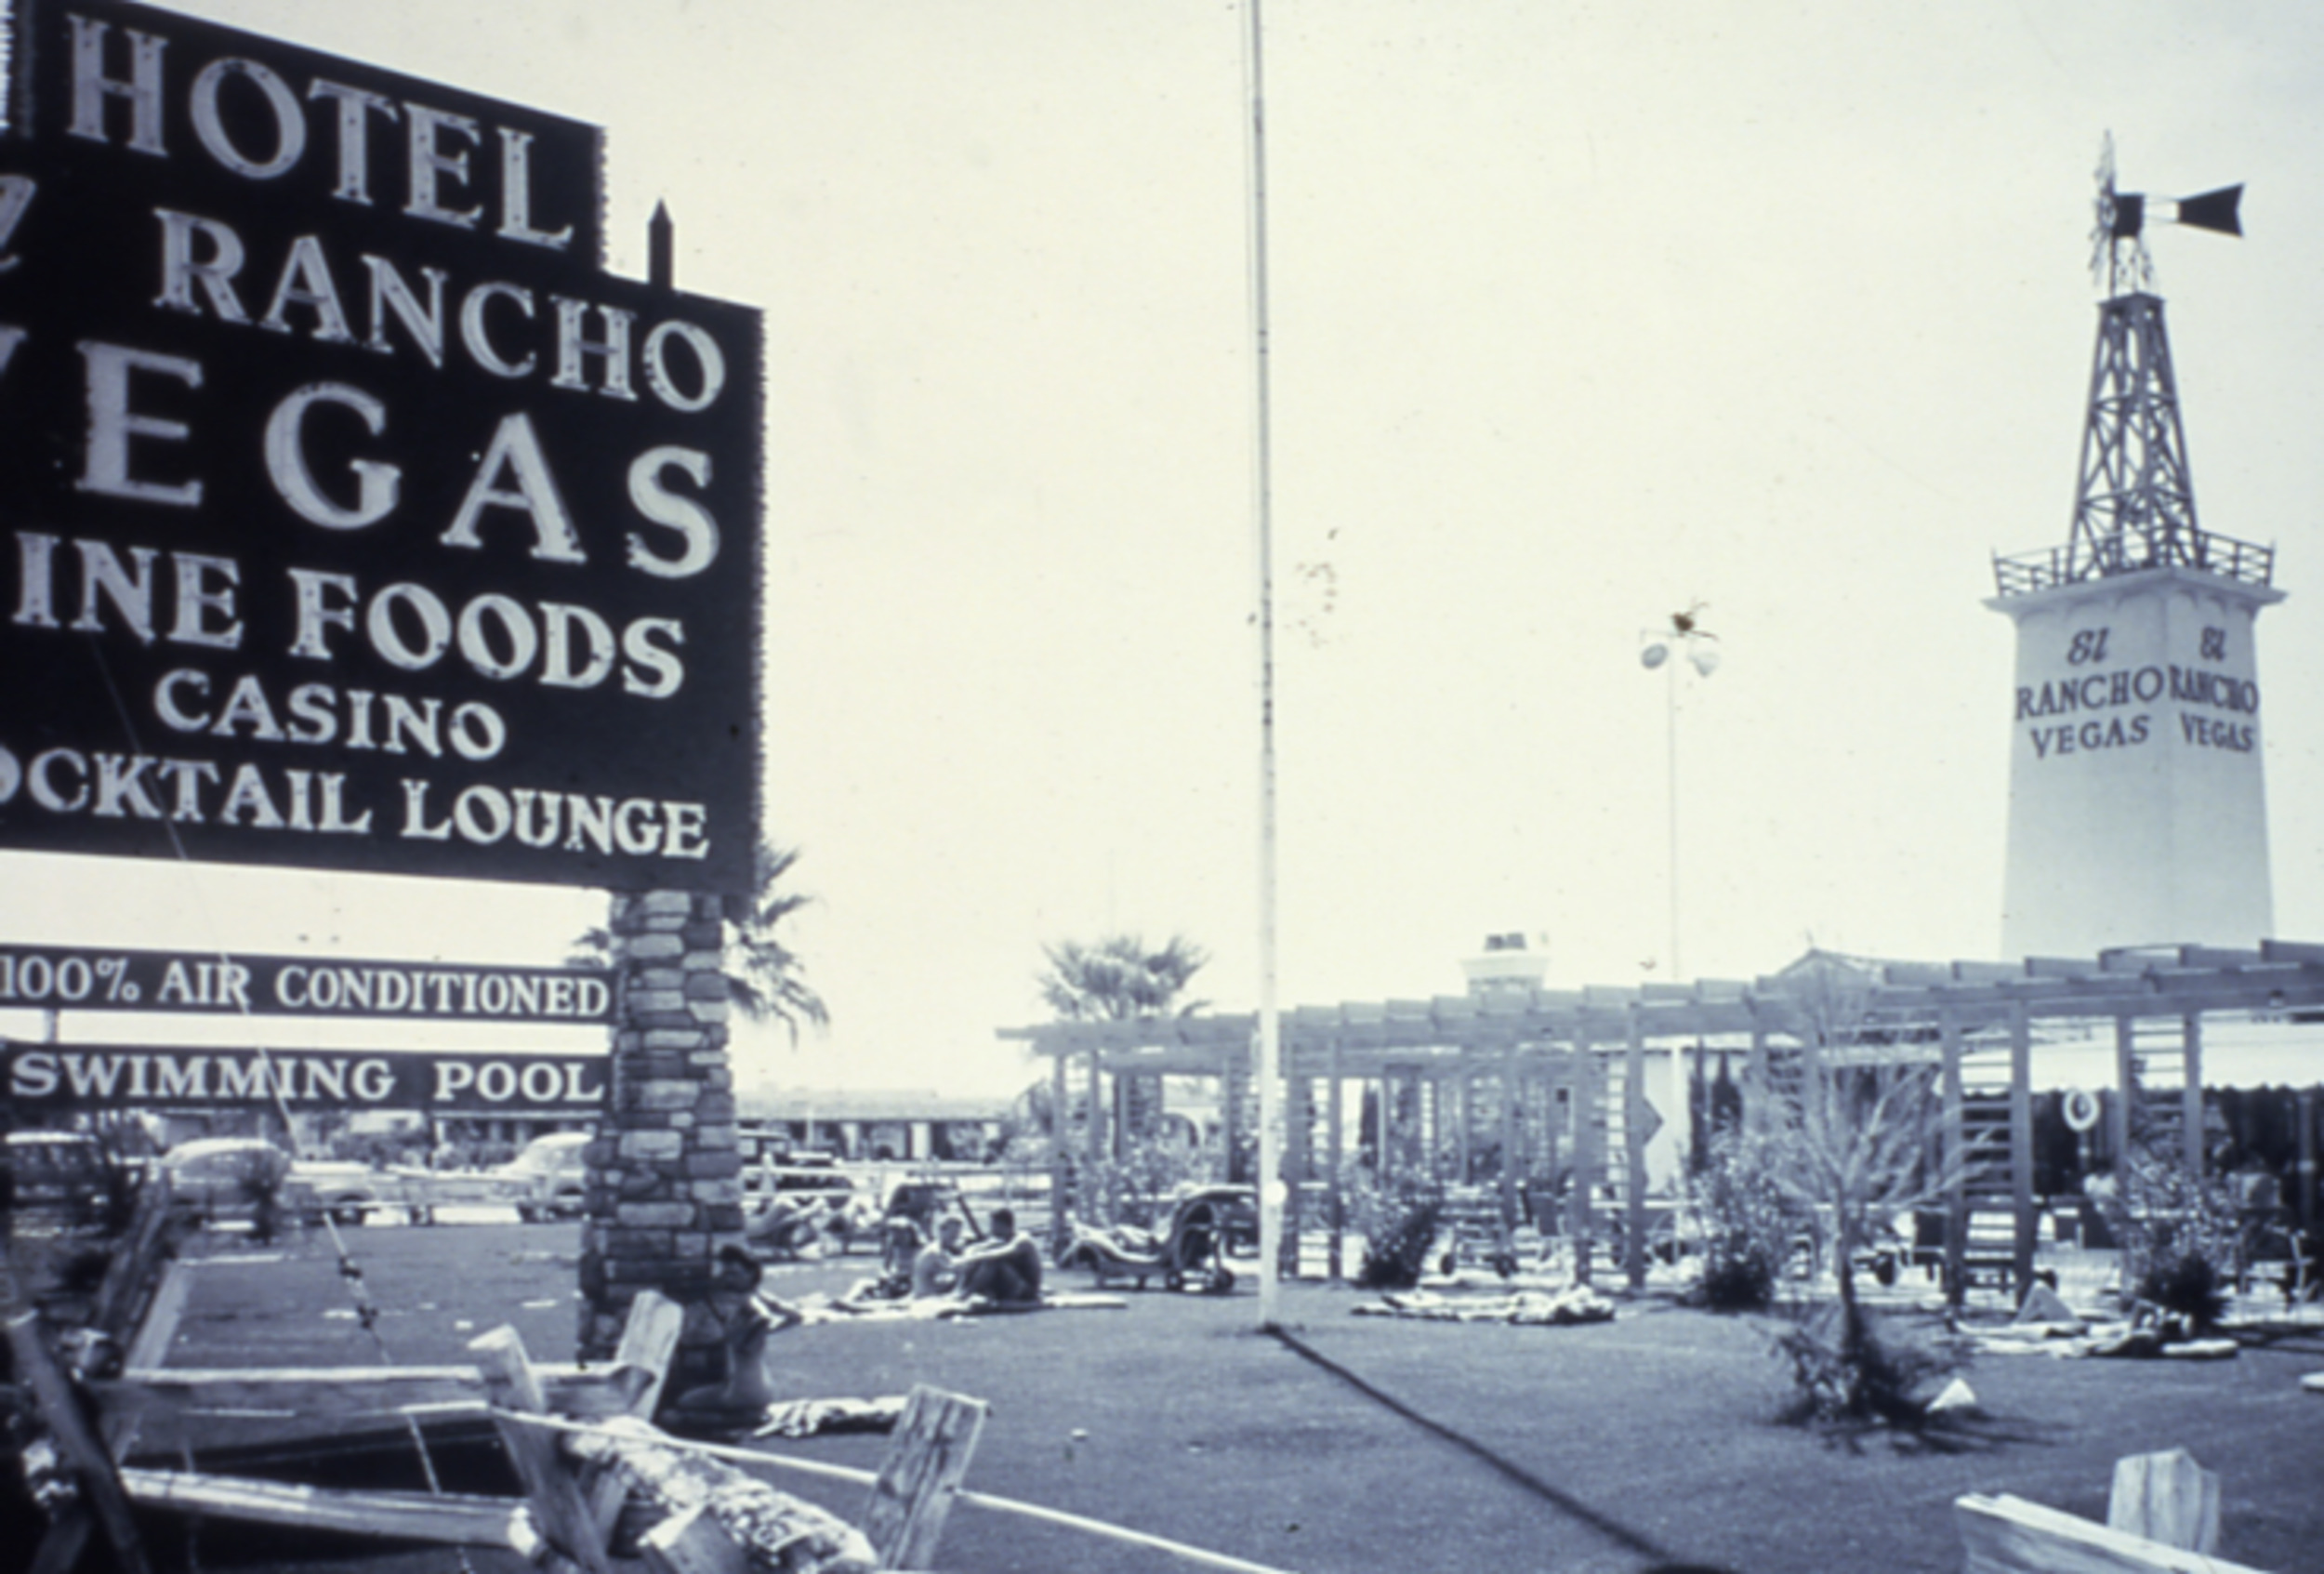 Slide of the Hotel El Rancho Vegas, Las Vegas, Nevada, circa 1940s